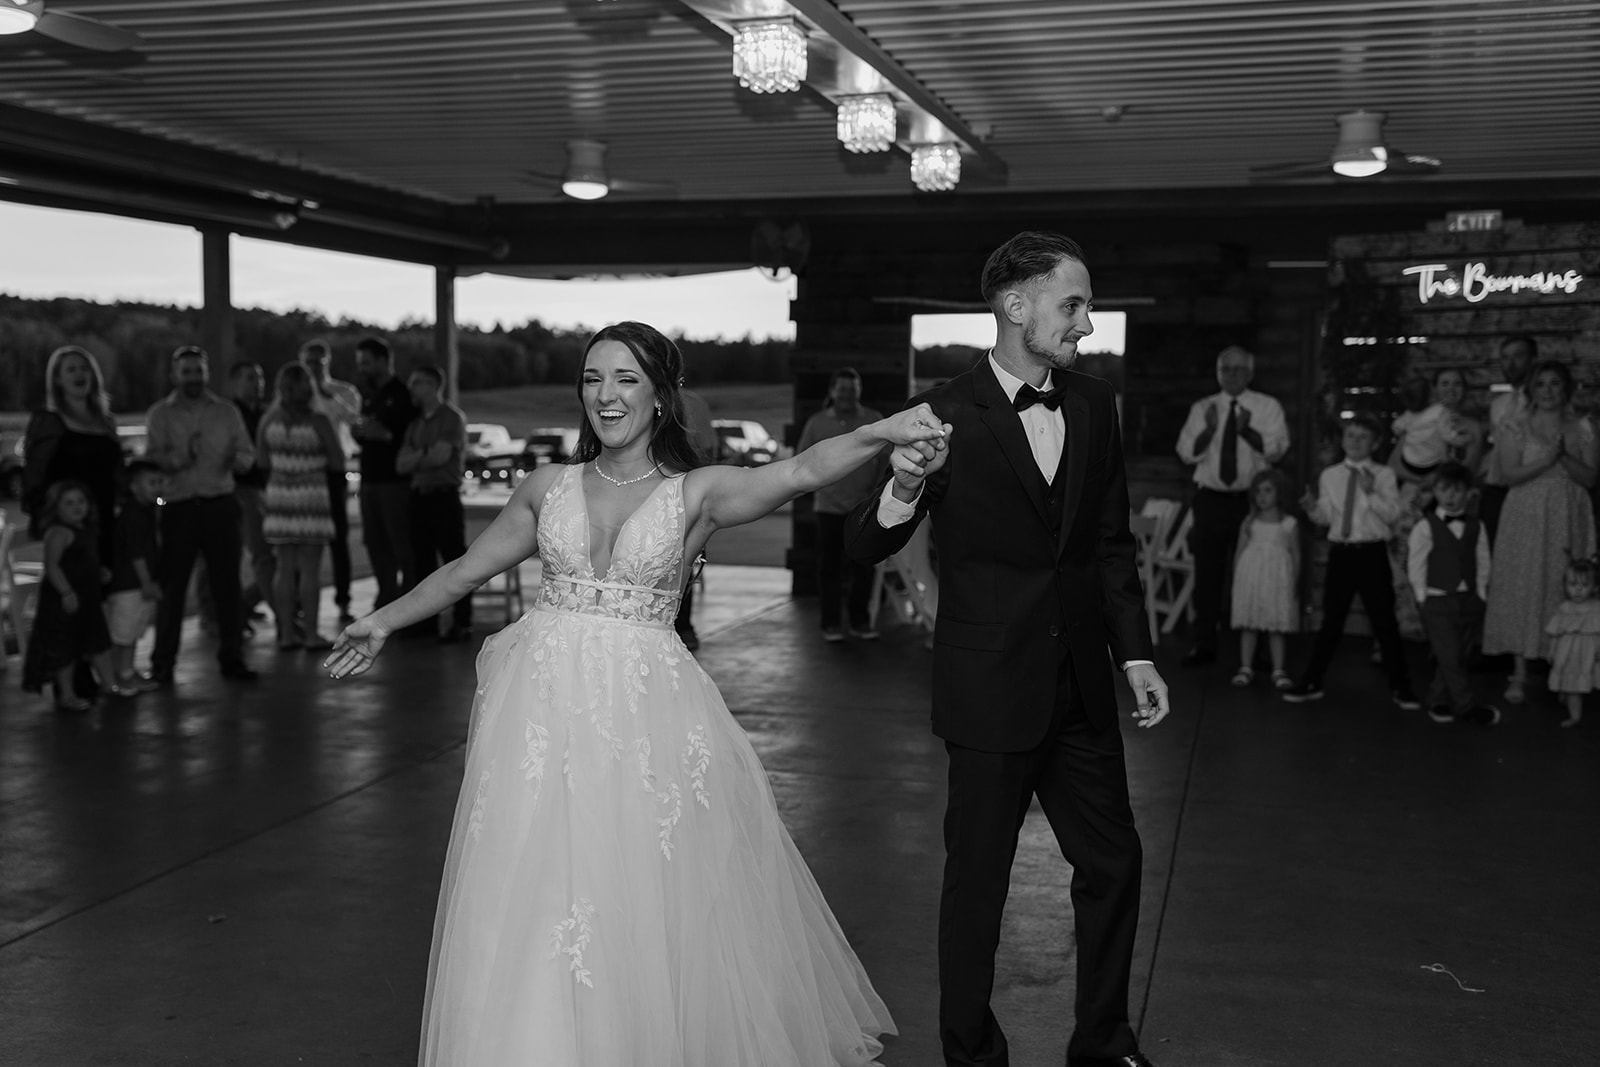 Bride and groom dance underneath lights